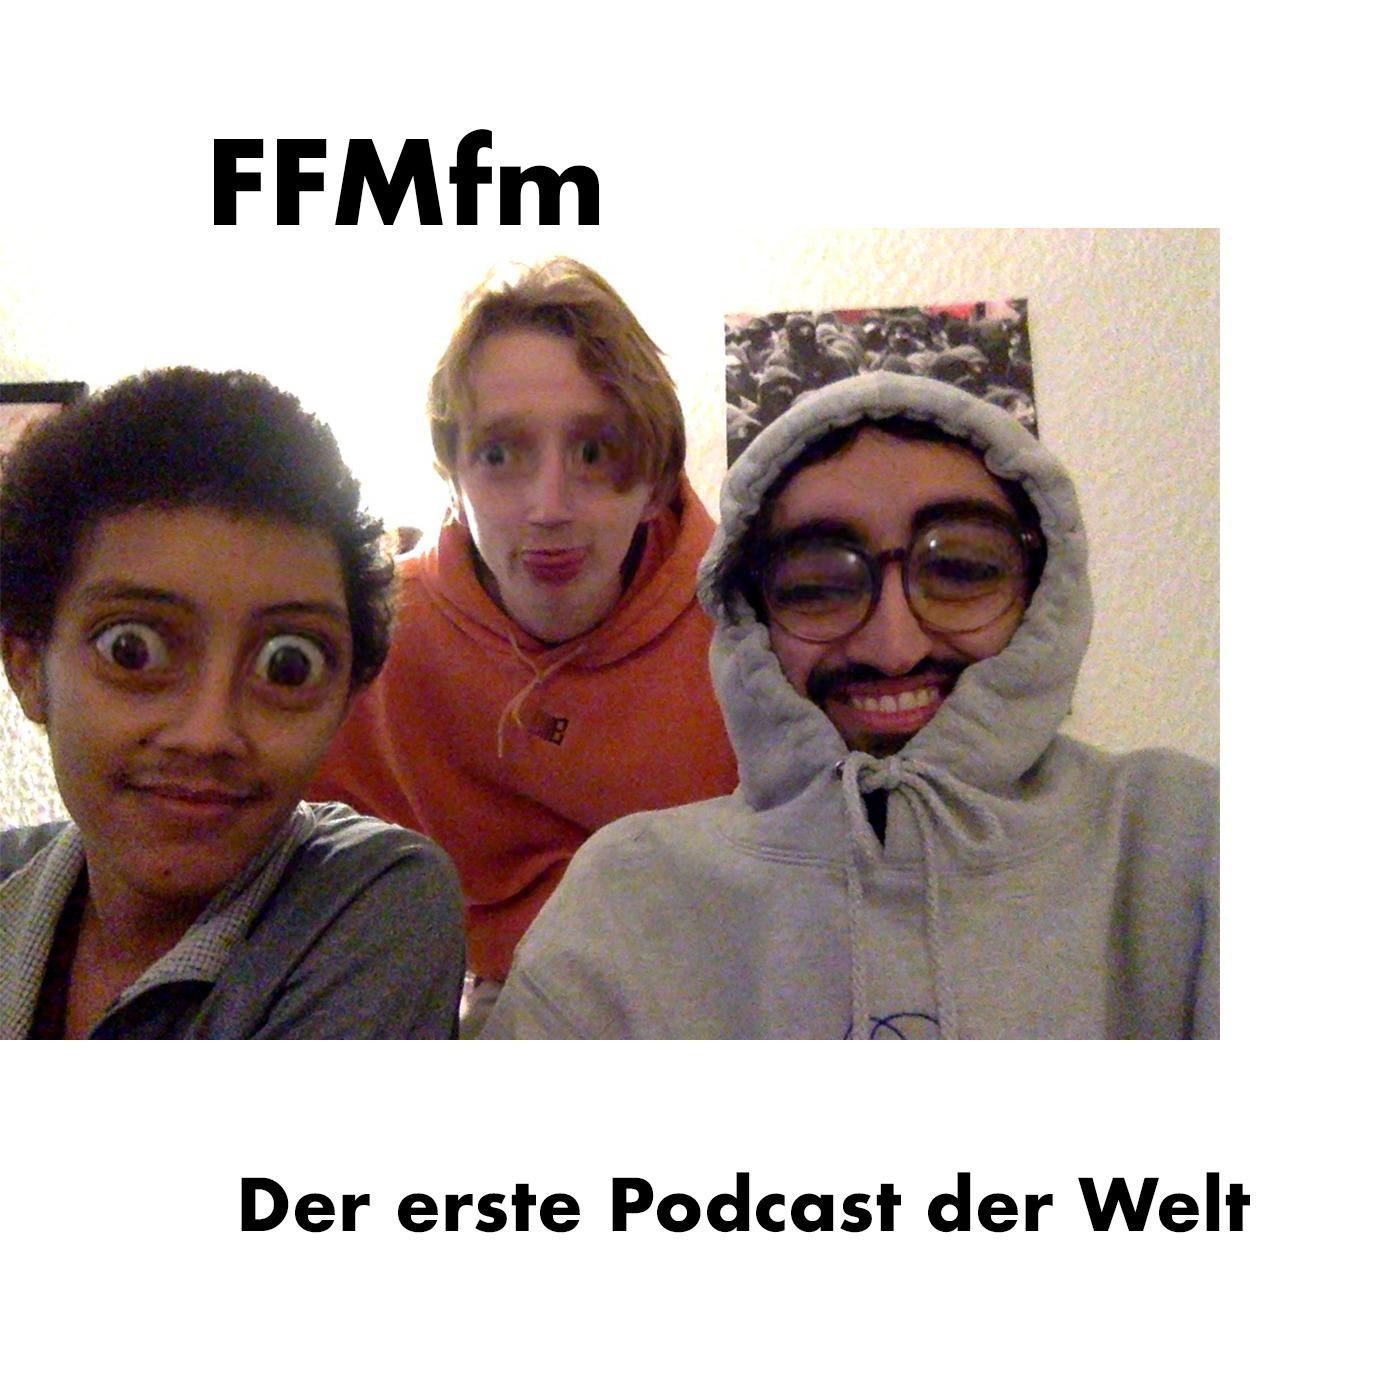 FFMfm